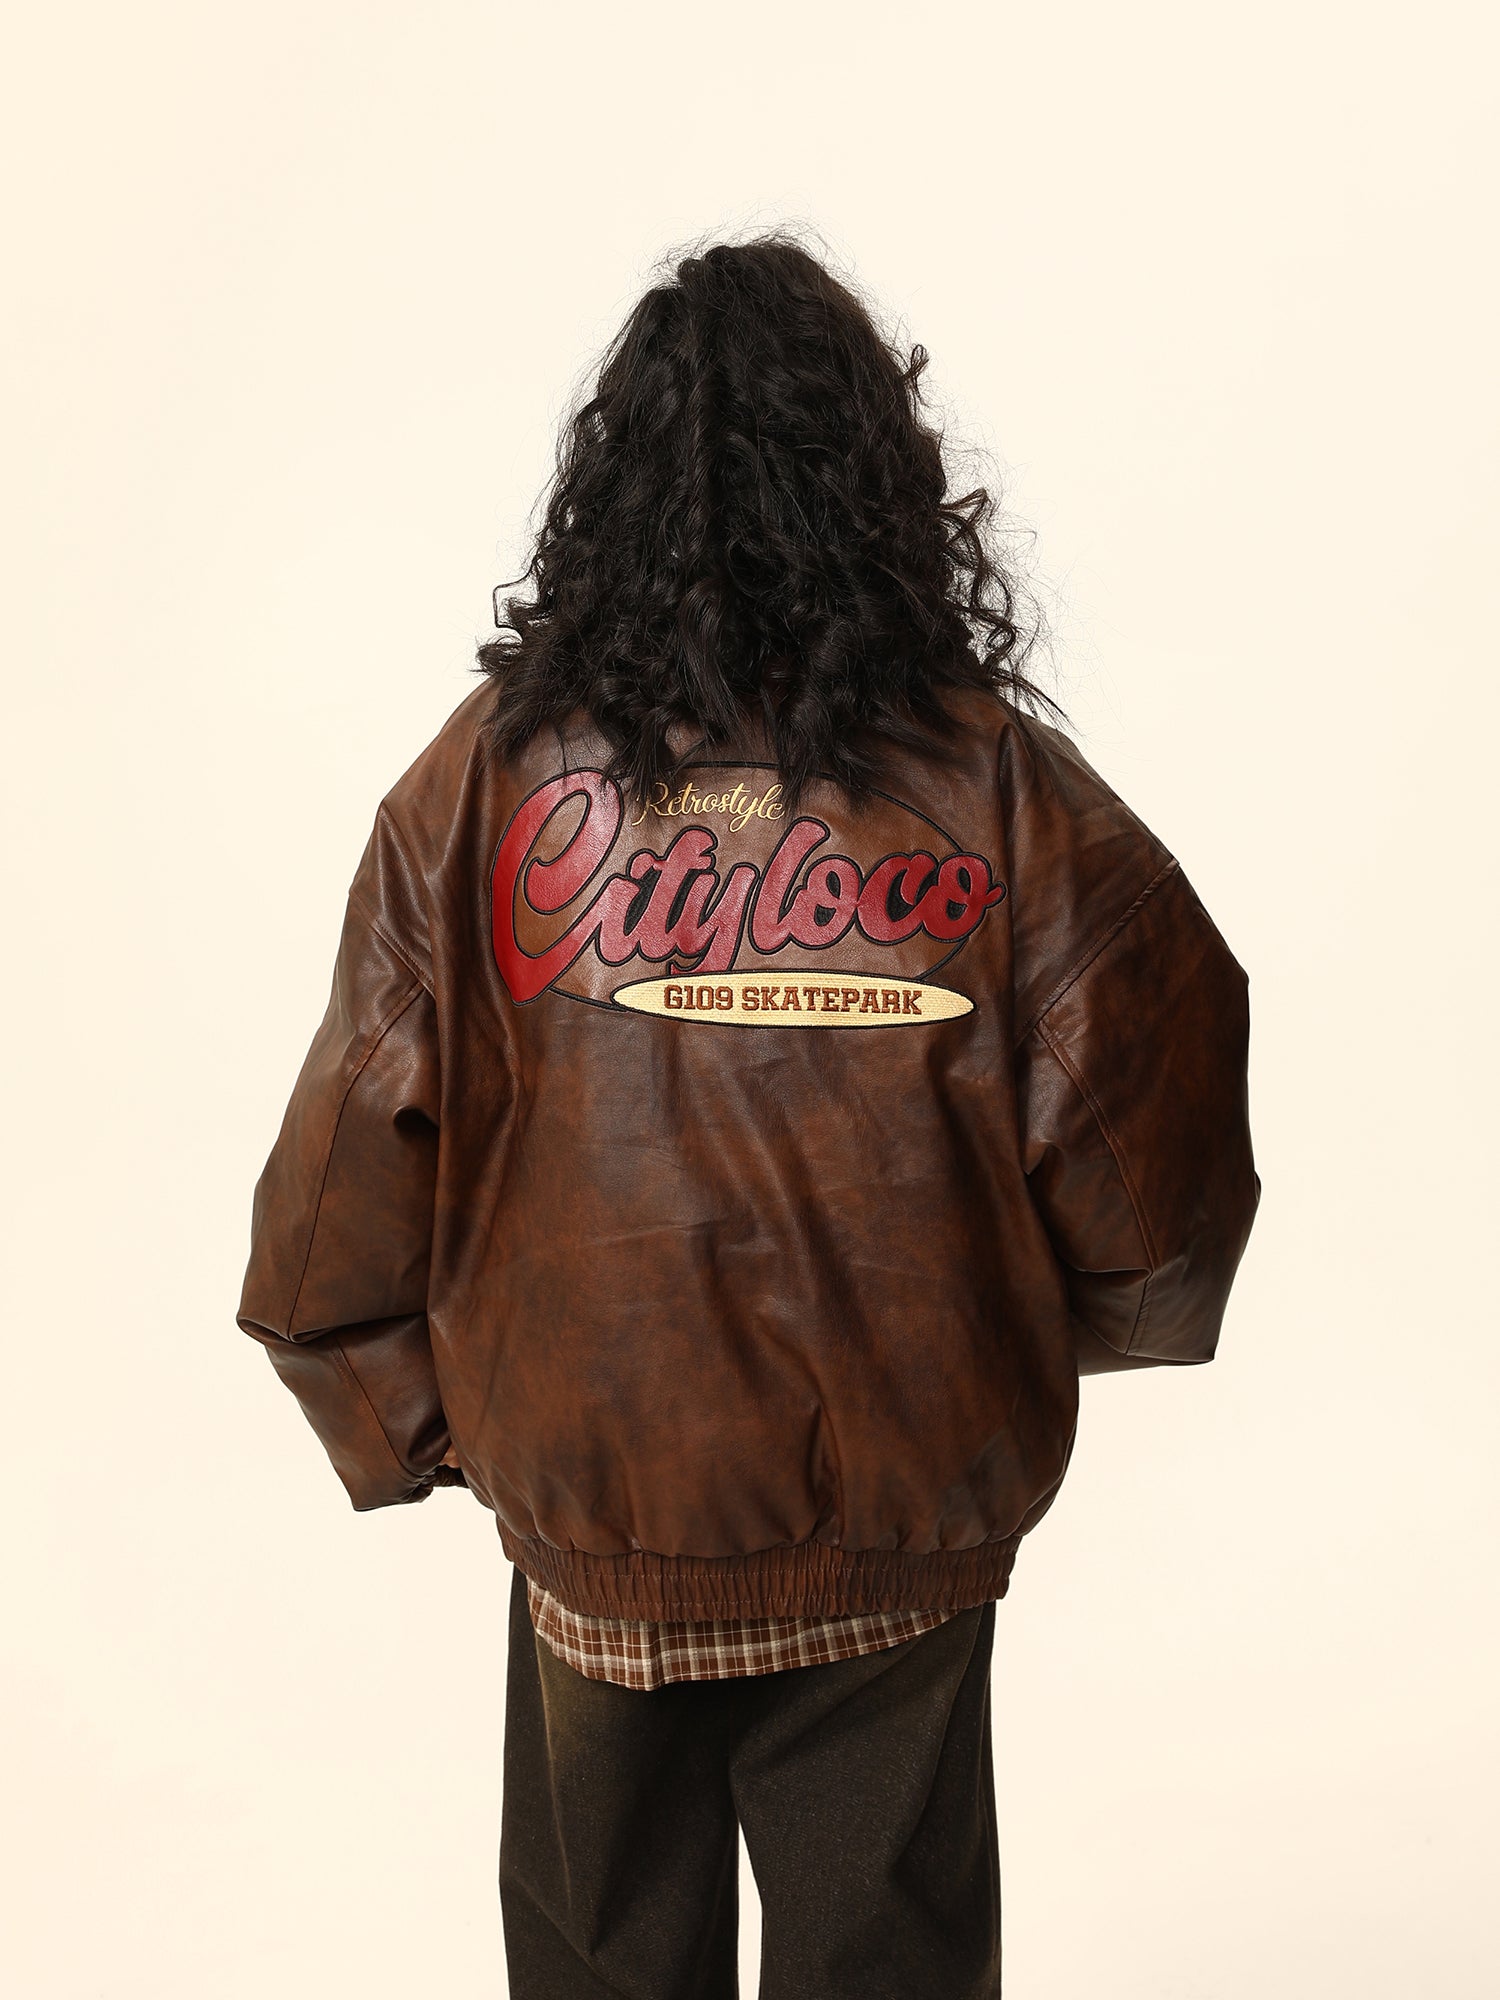 QS294A retro leather jacket